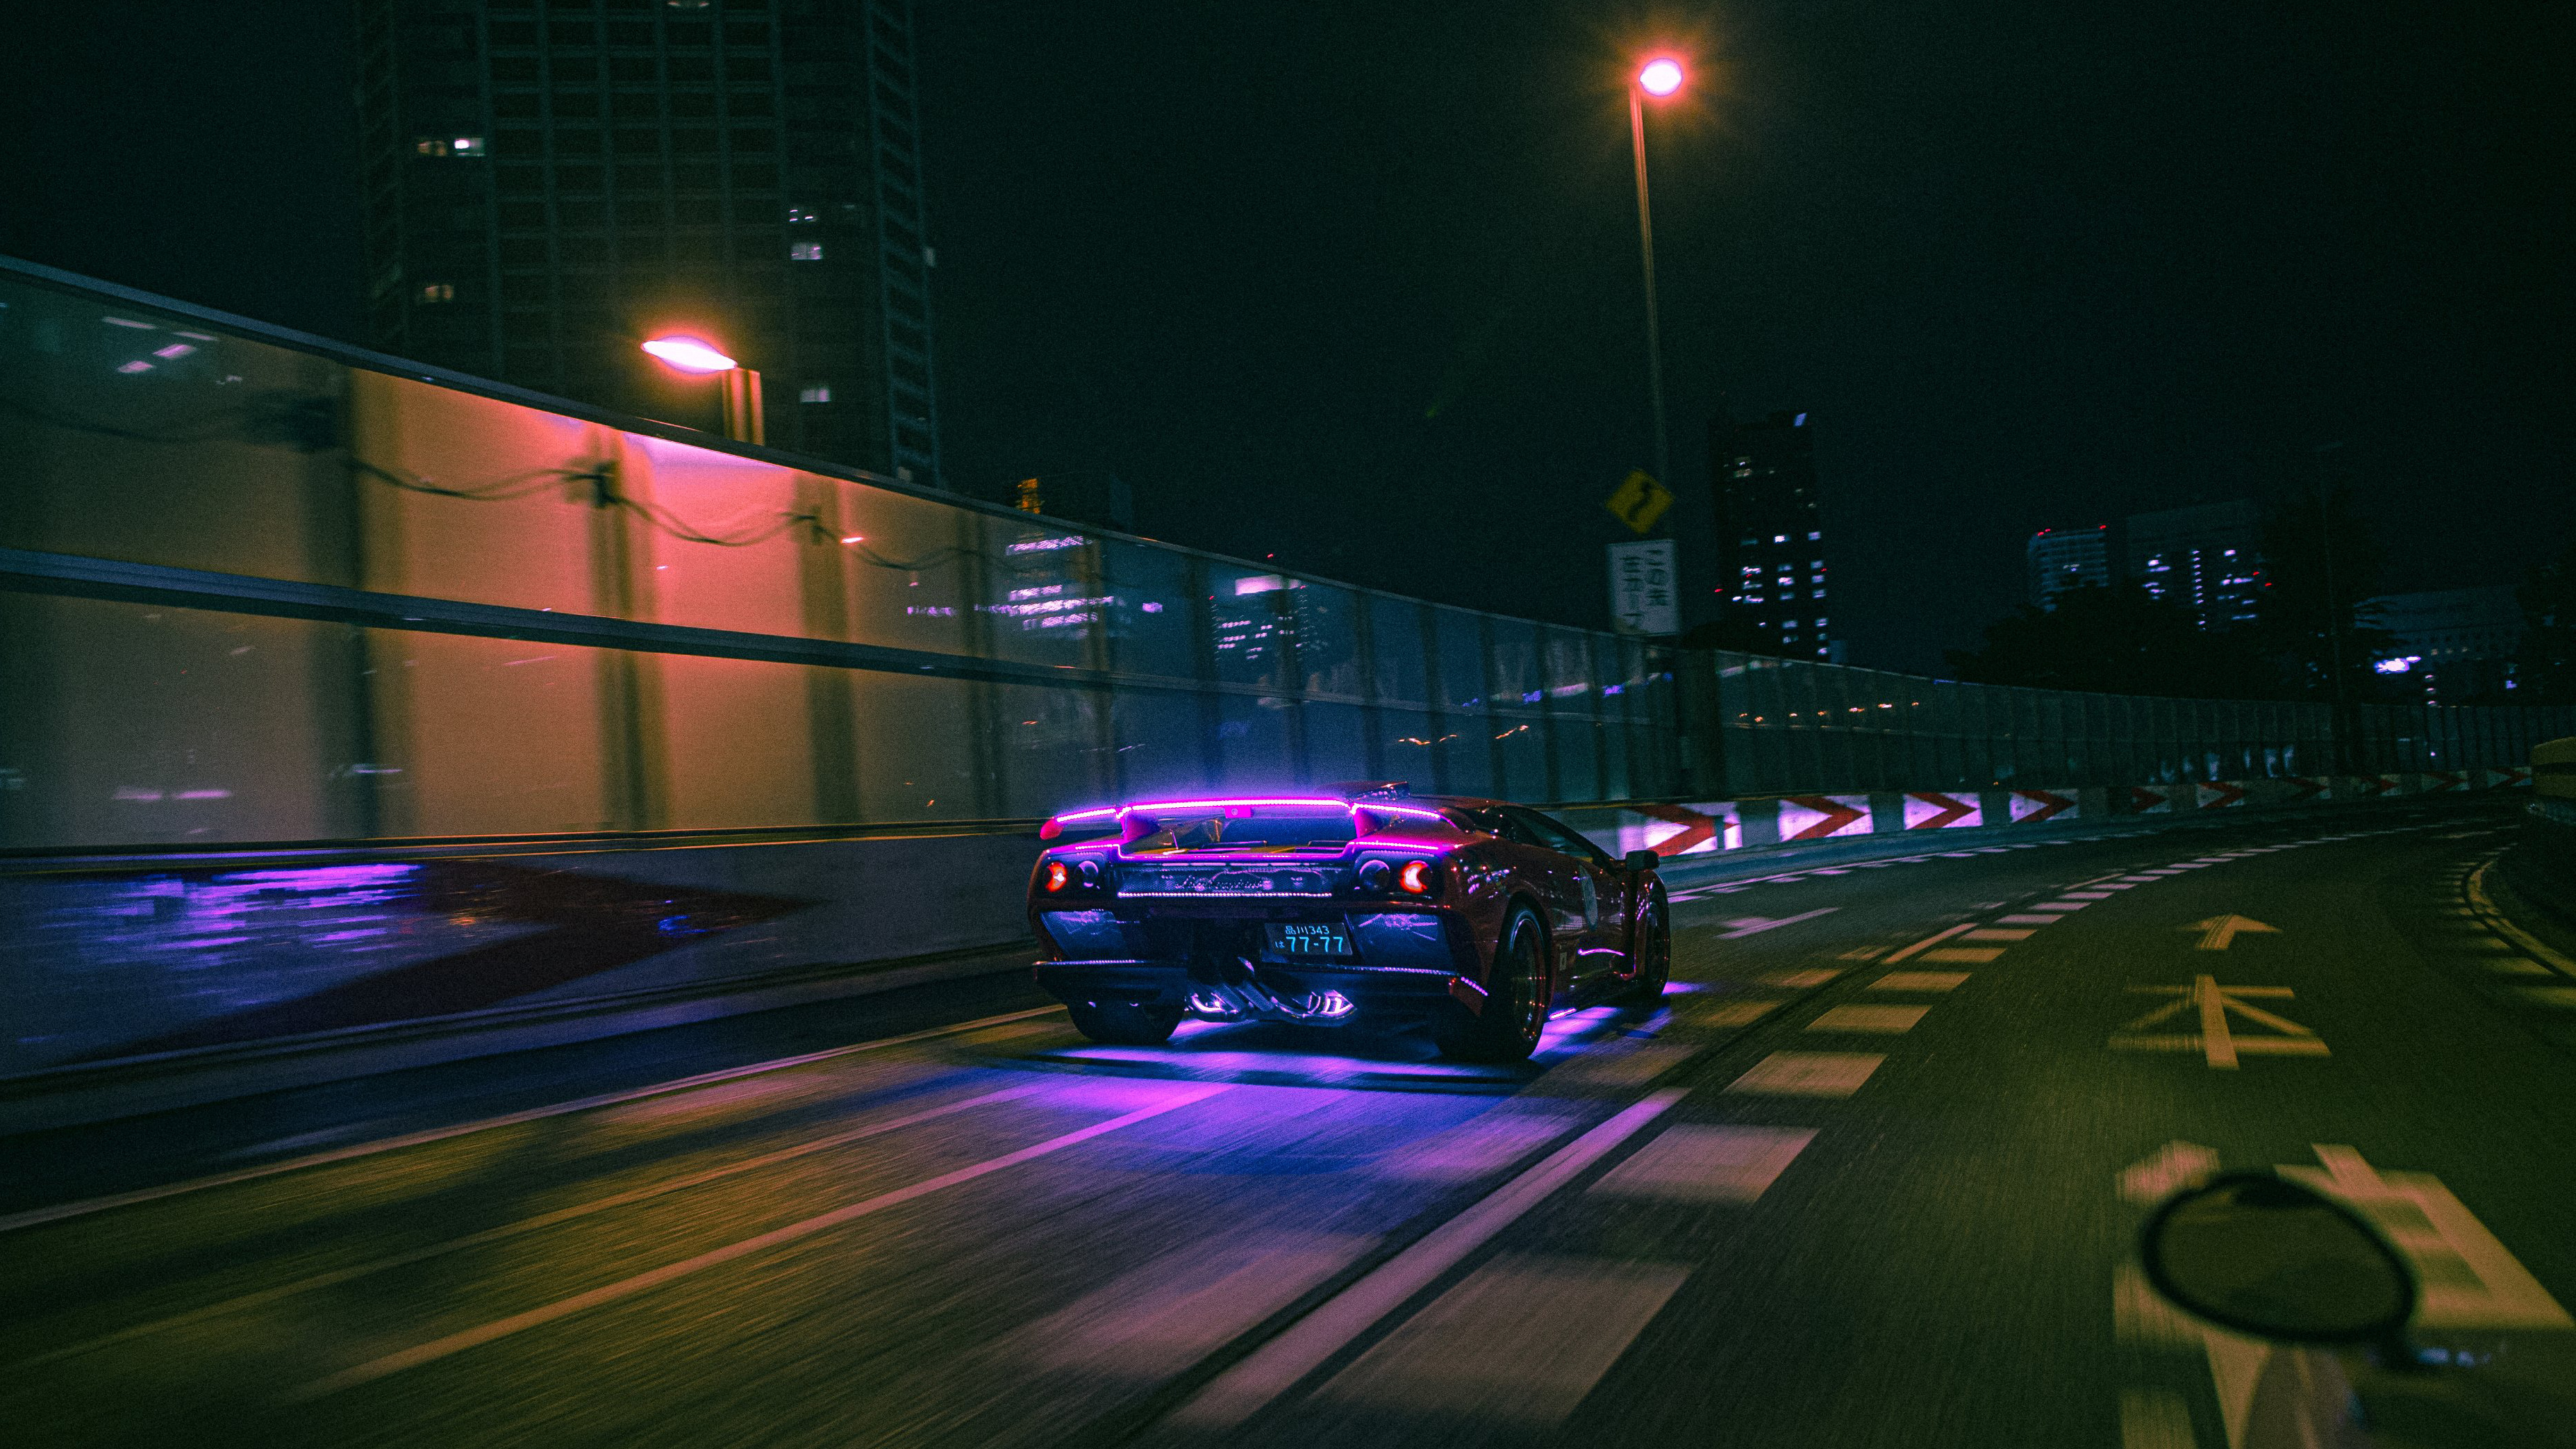 Neon Lamborghini Wallpapers